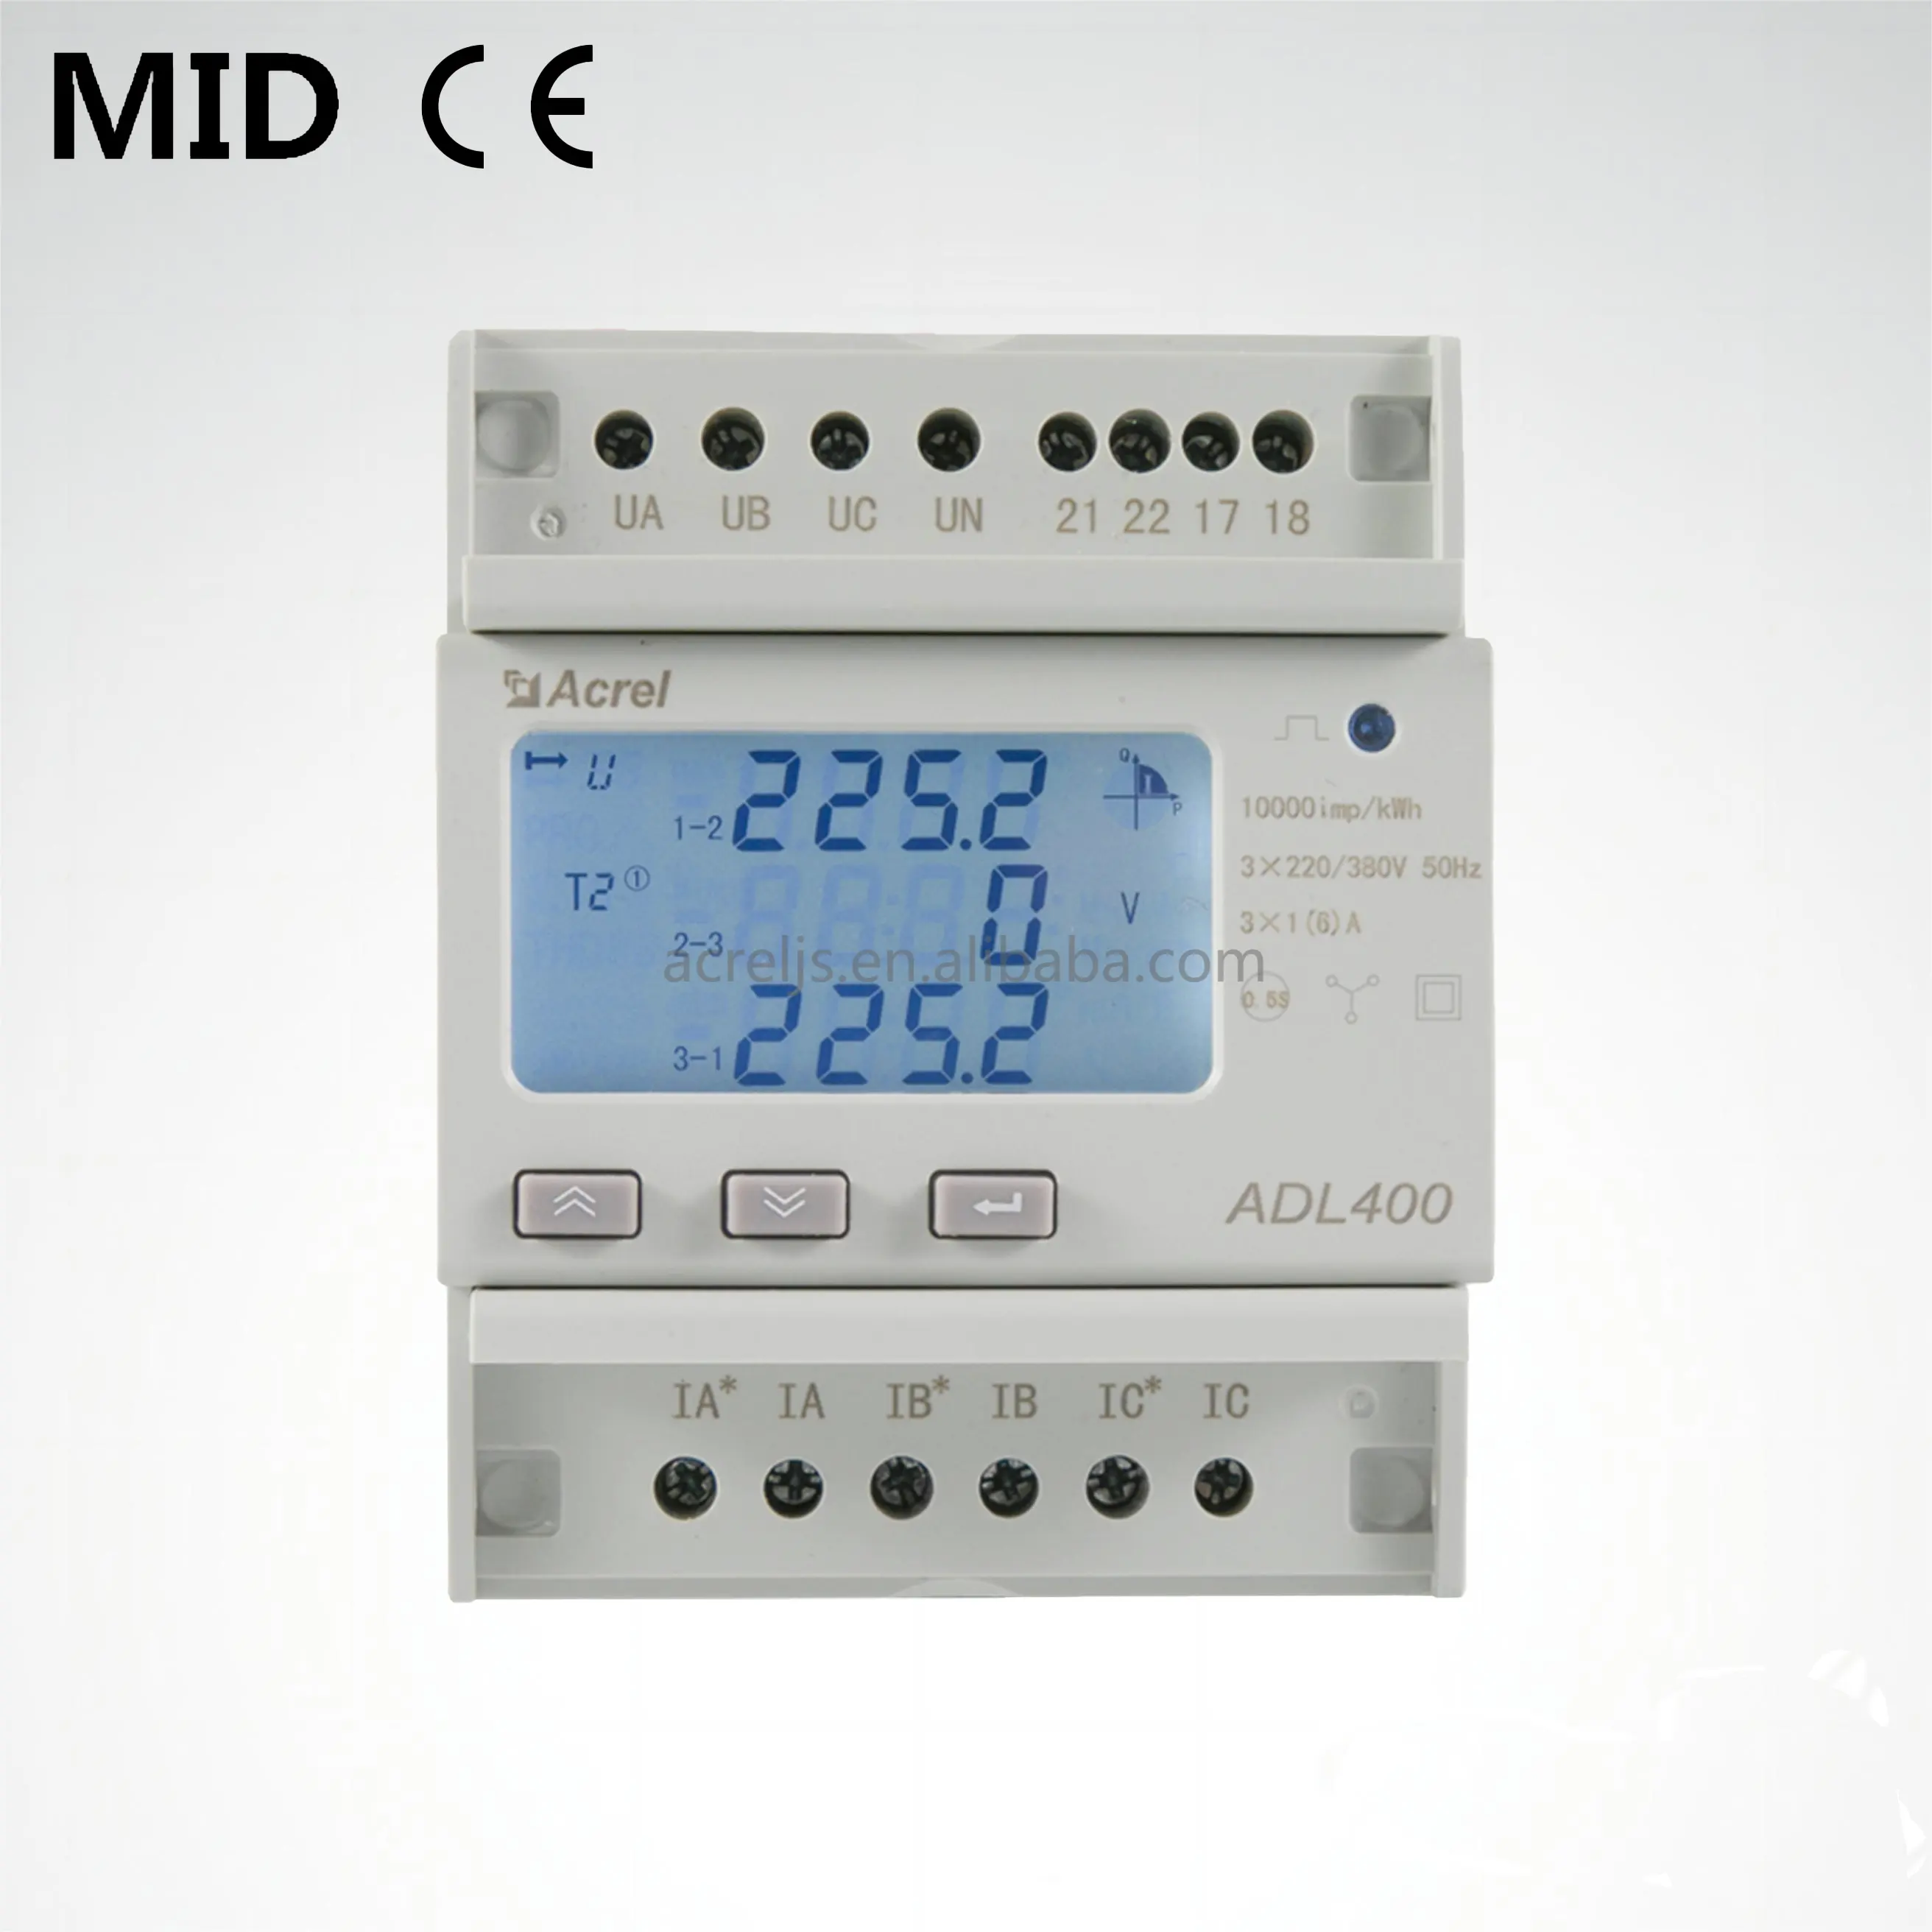 Acrel ADL400 CEMIDエネルギーメーター3相パワーメーター3*220/380V5A入力CTsRS485スマートKwhメーター